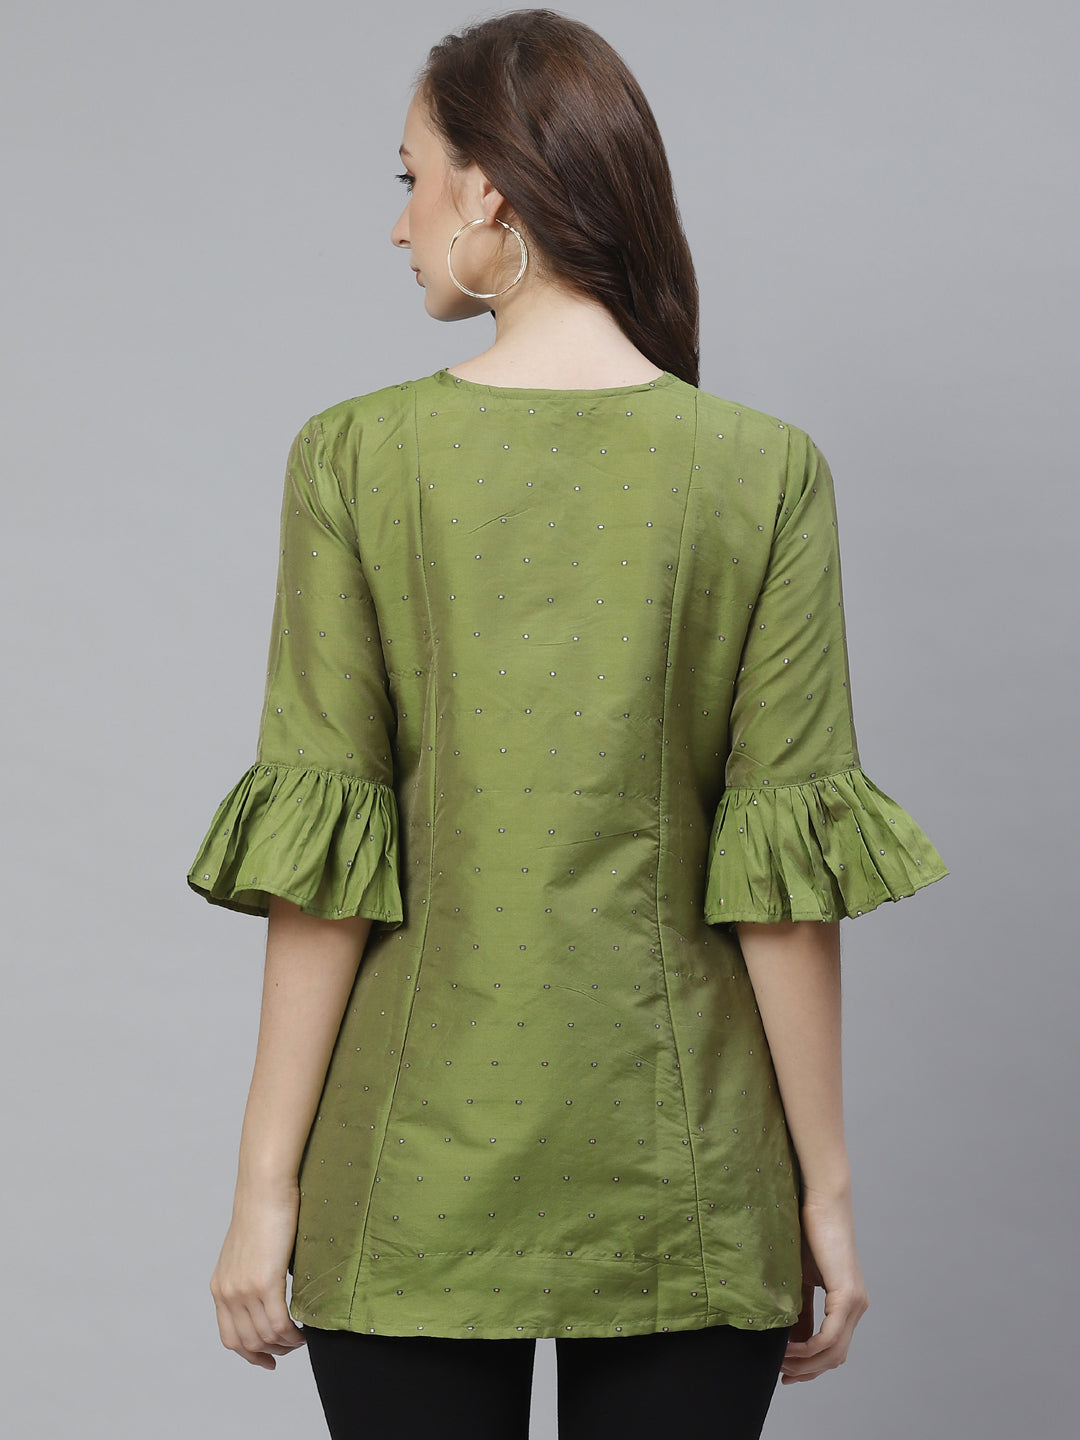 Bhama Couture Pista Green Tunic